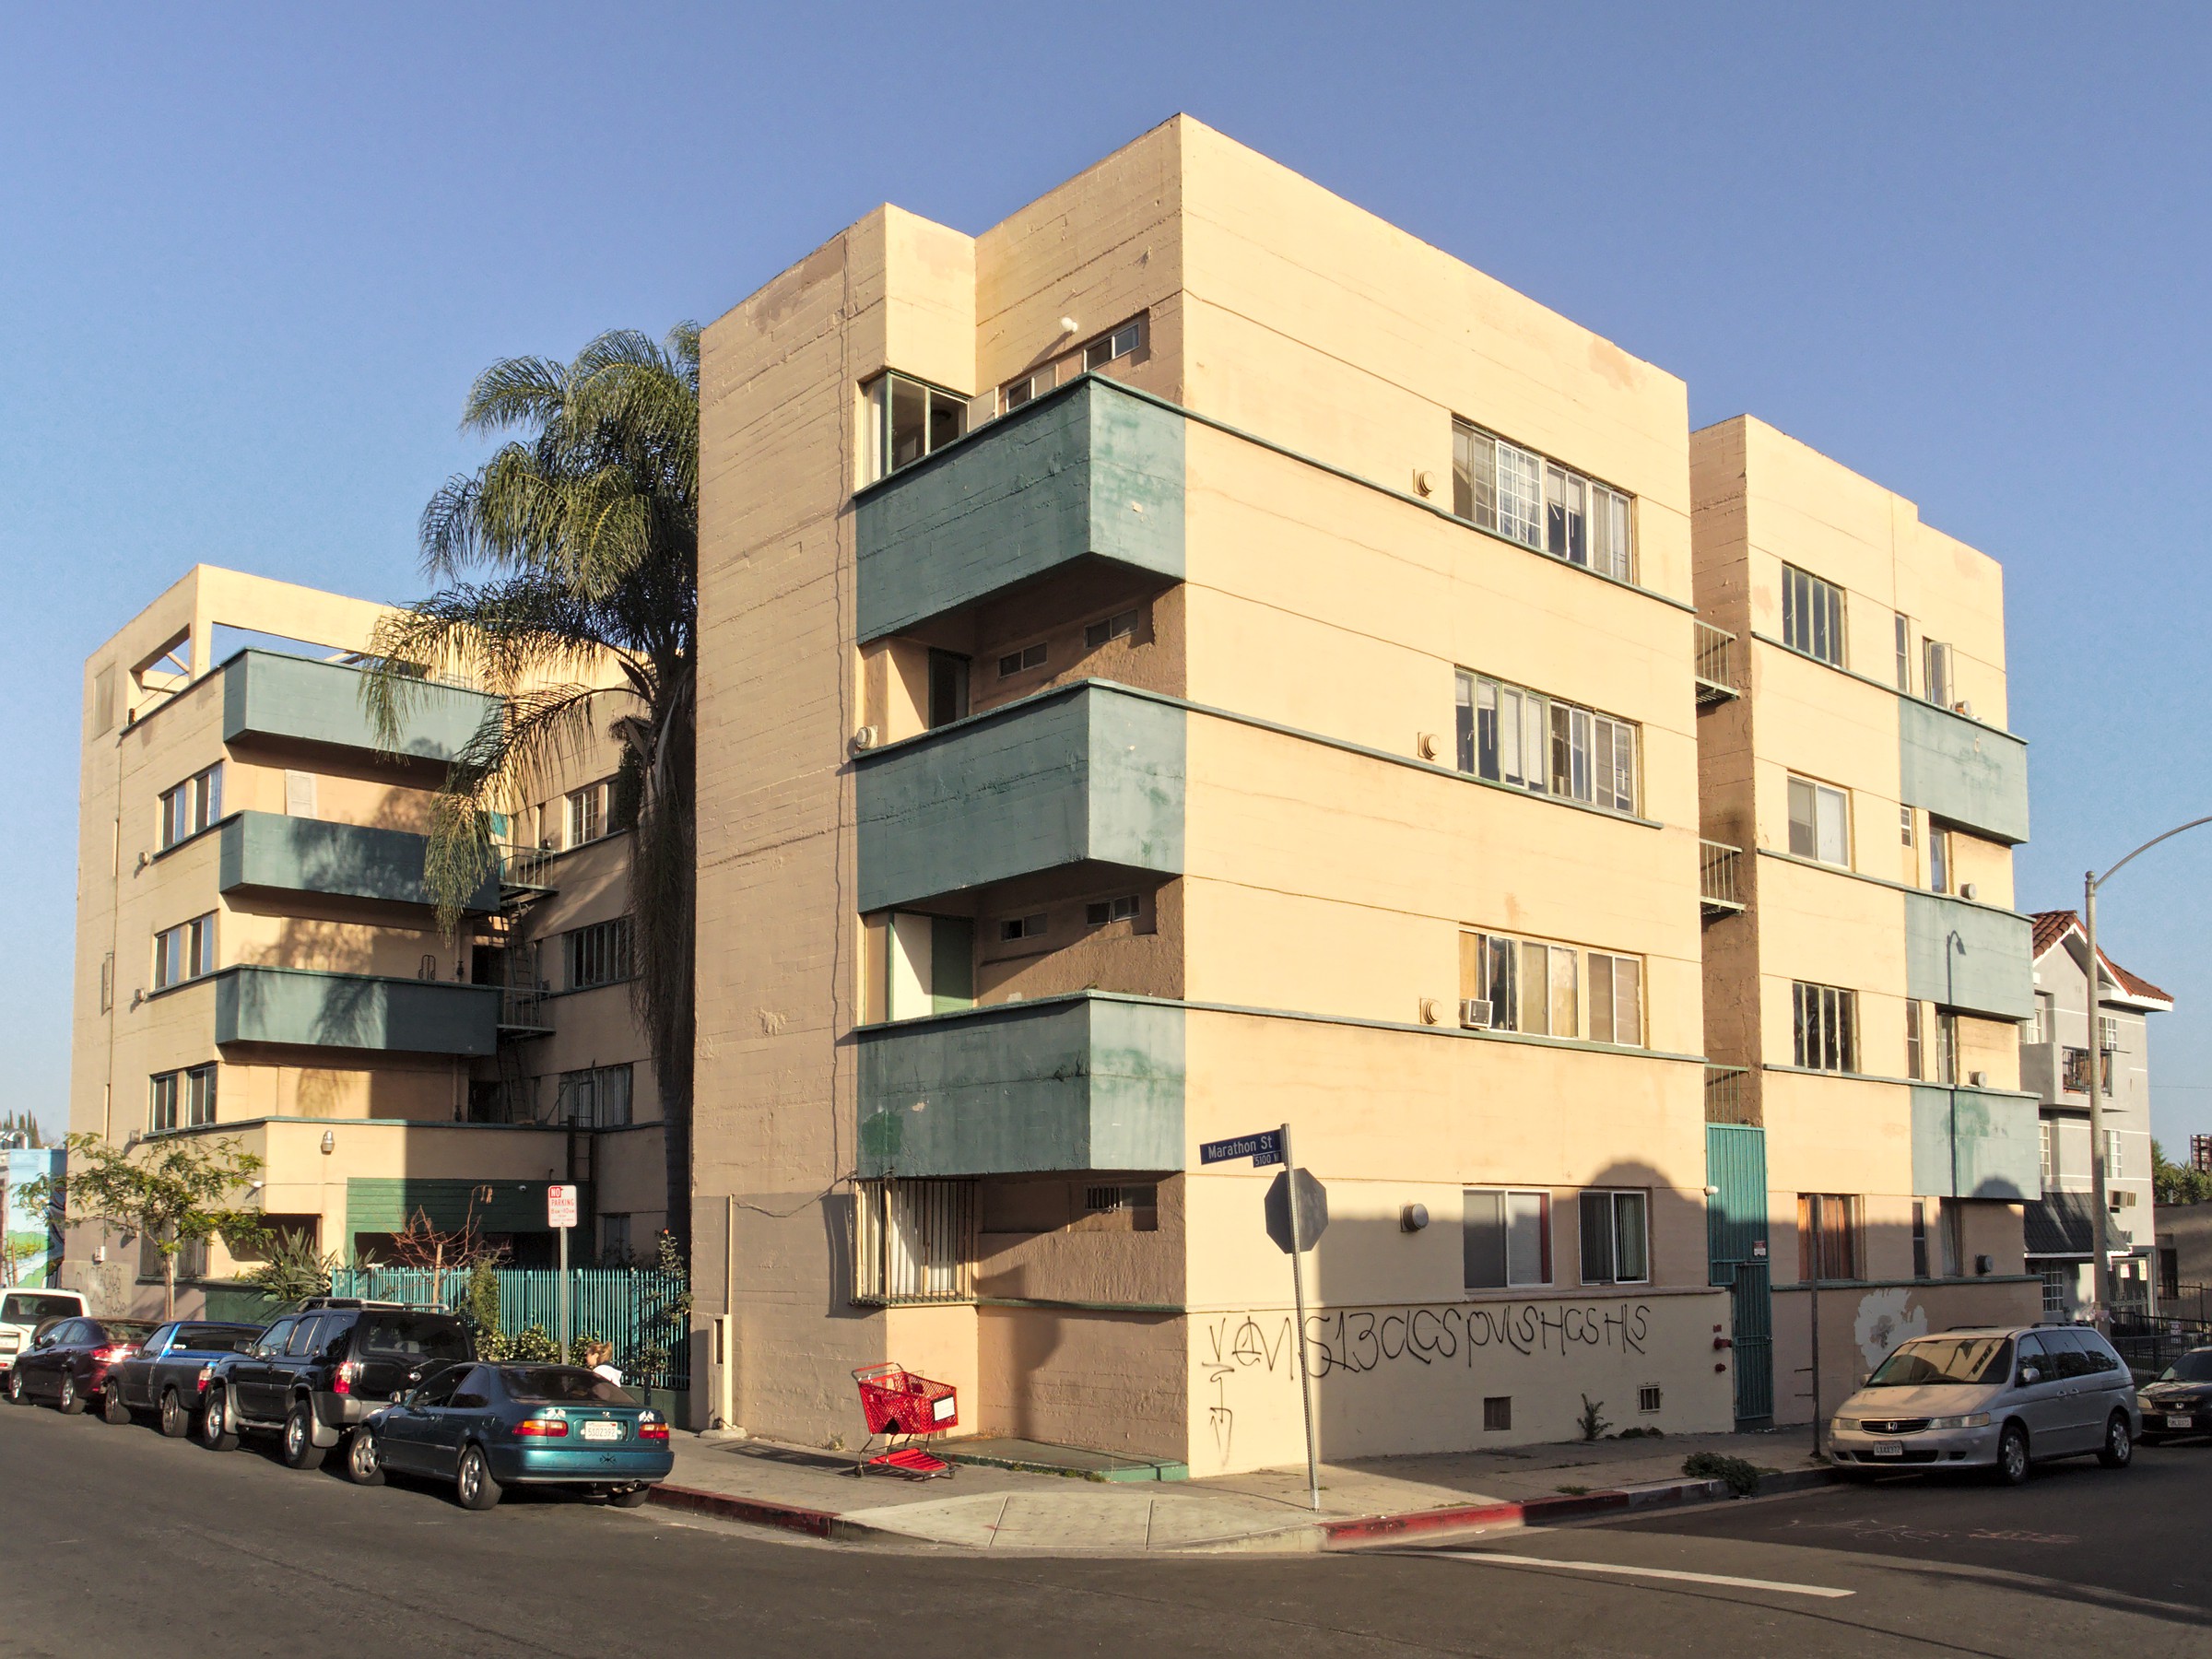 A Richard Neutra-designed apartment block